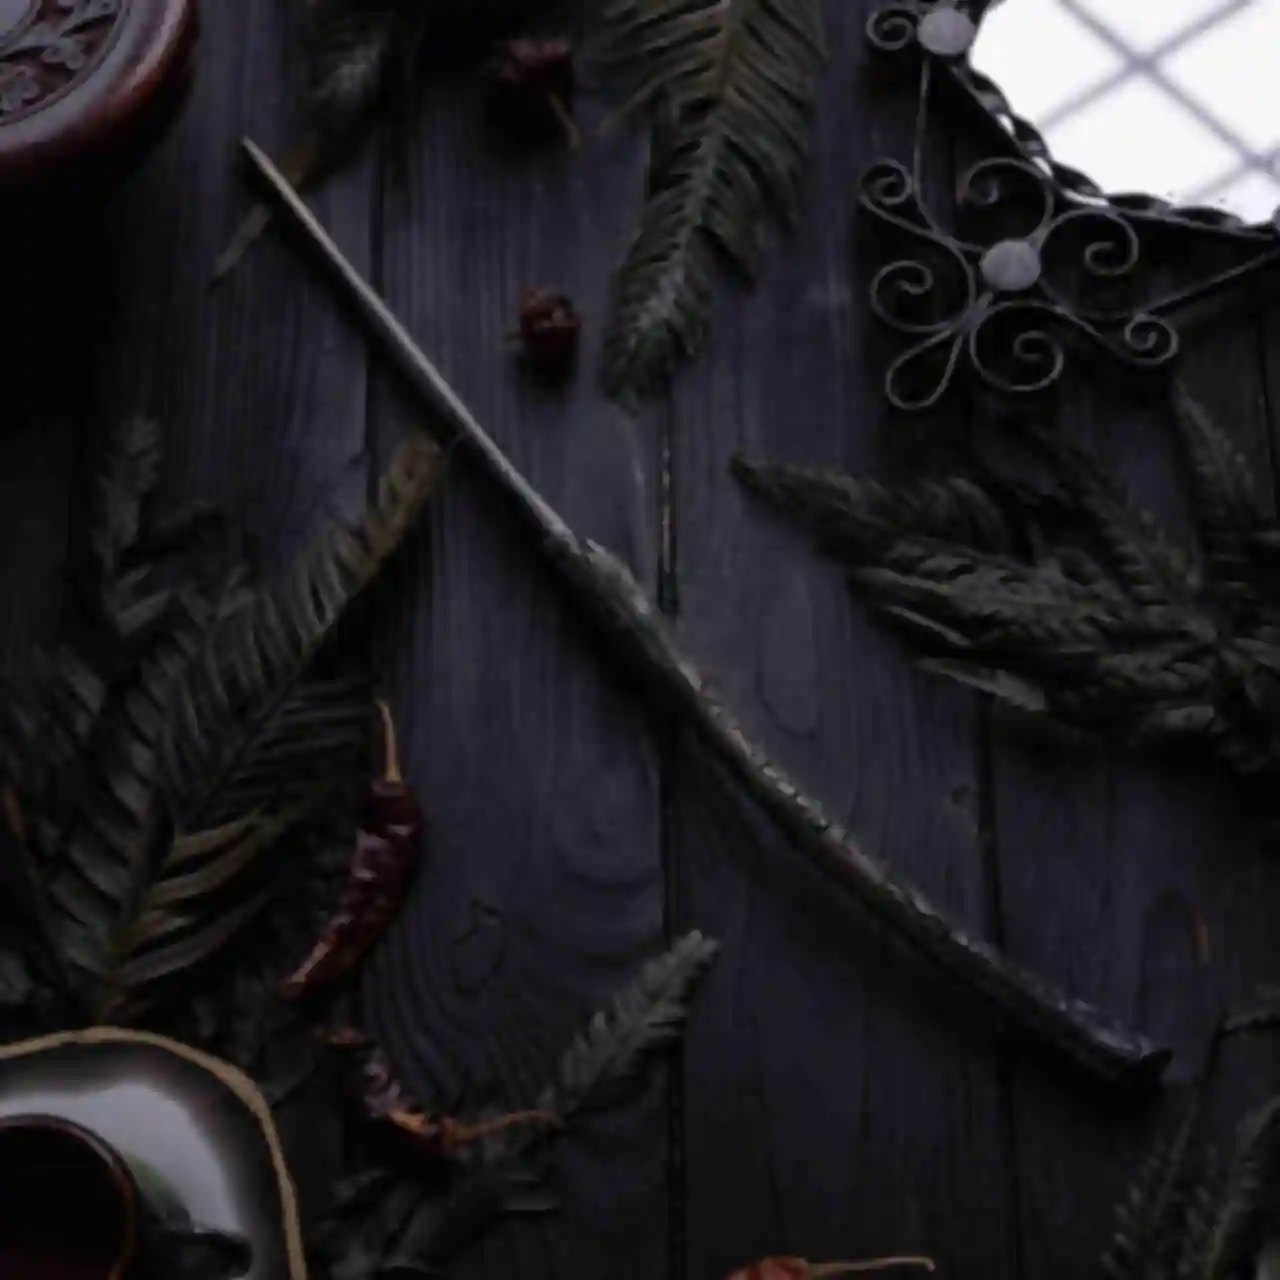 Волшебная палочка Беллатрисы Лестрейндж ⚡️ Bellatrix Lestrange's Wand ⚡️ Сувениры Гарри Поттер ⚡️ Harry Potter. Фото №6